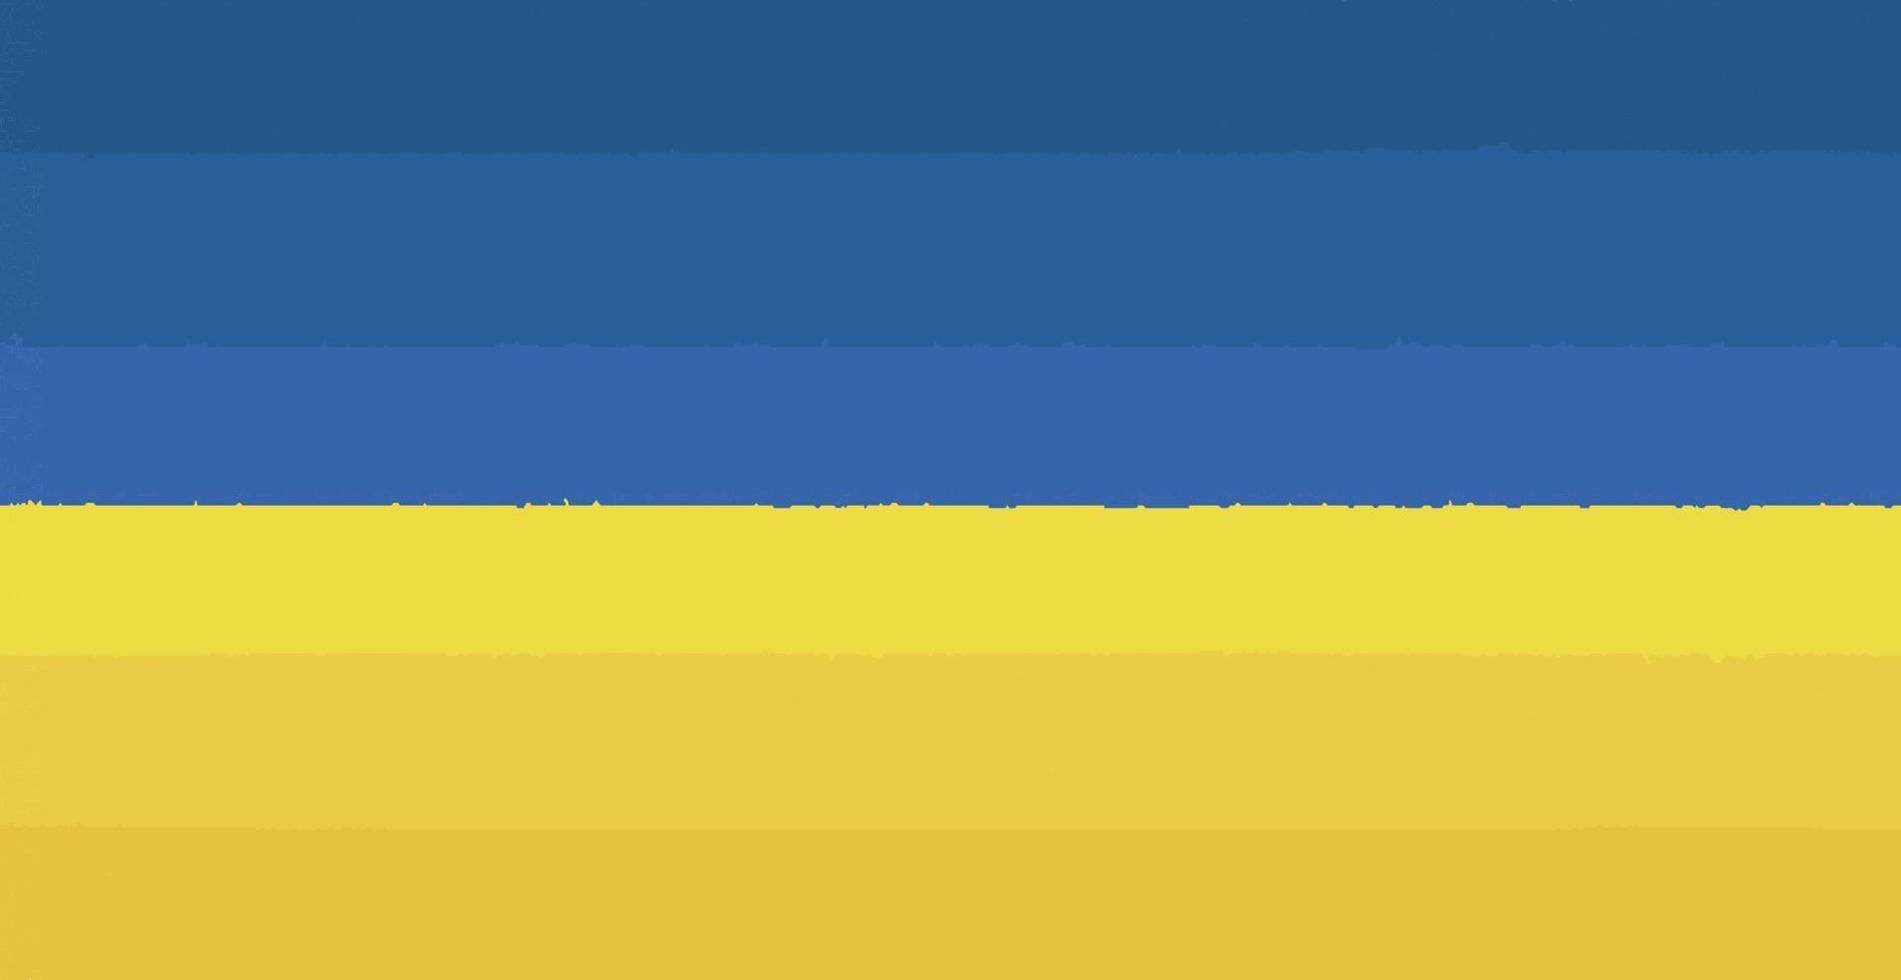 fondo panorámico abstracto azul-naranja bandera de ucrania con pinceladas de pintura - vector